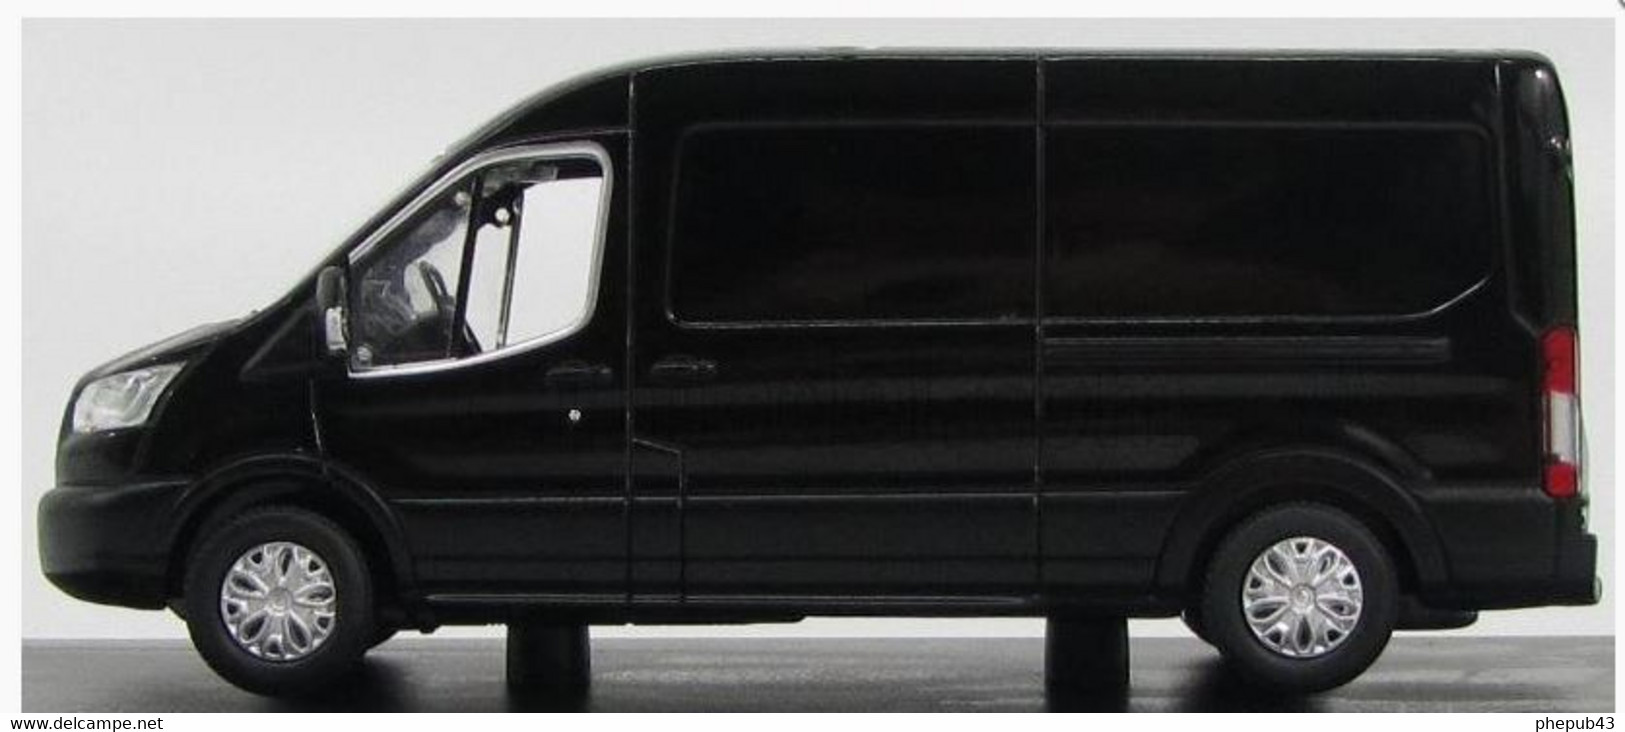 Ford Transit Van - 2015 - Black - Greenlight - Utilitari